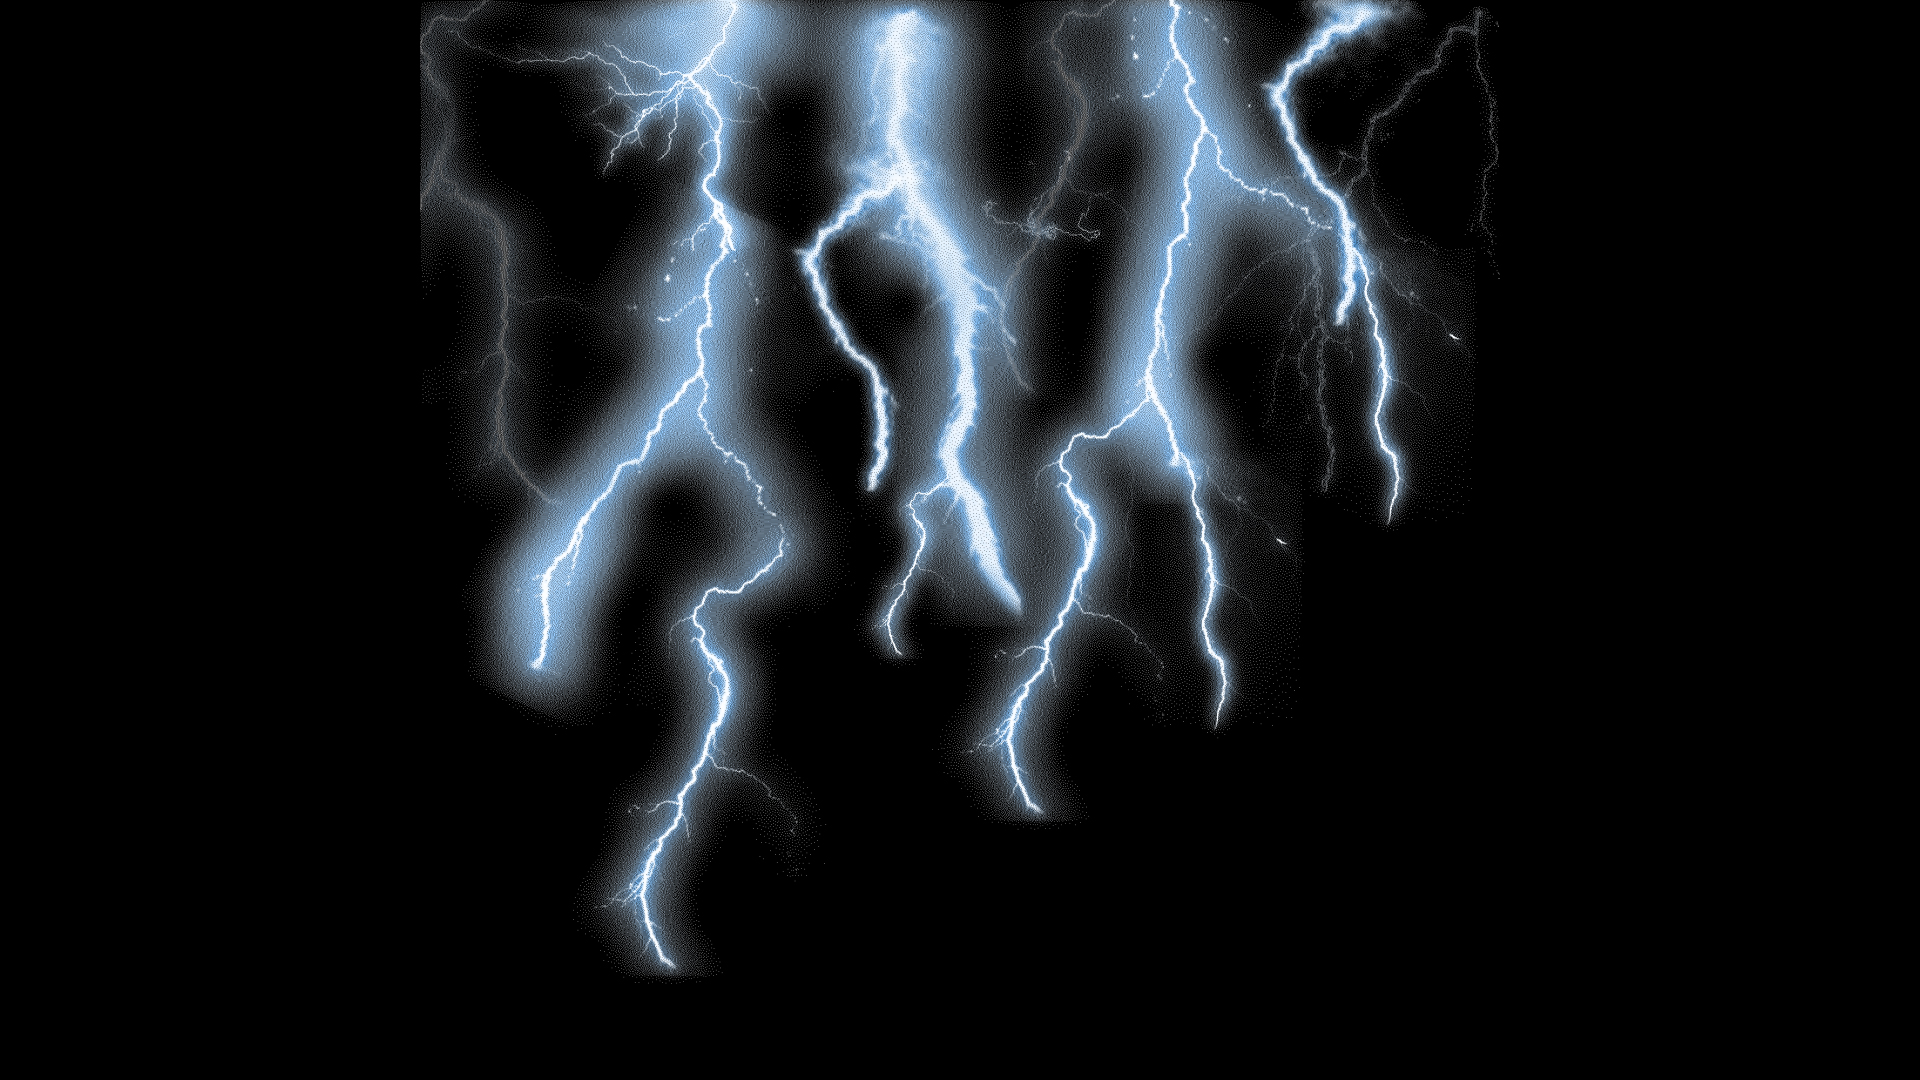 HD Lightning Storm Wallpaper - WallpaperSafari